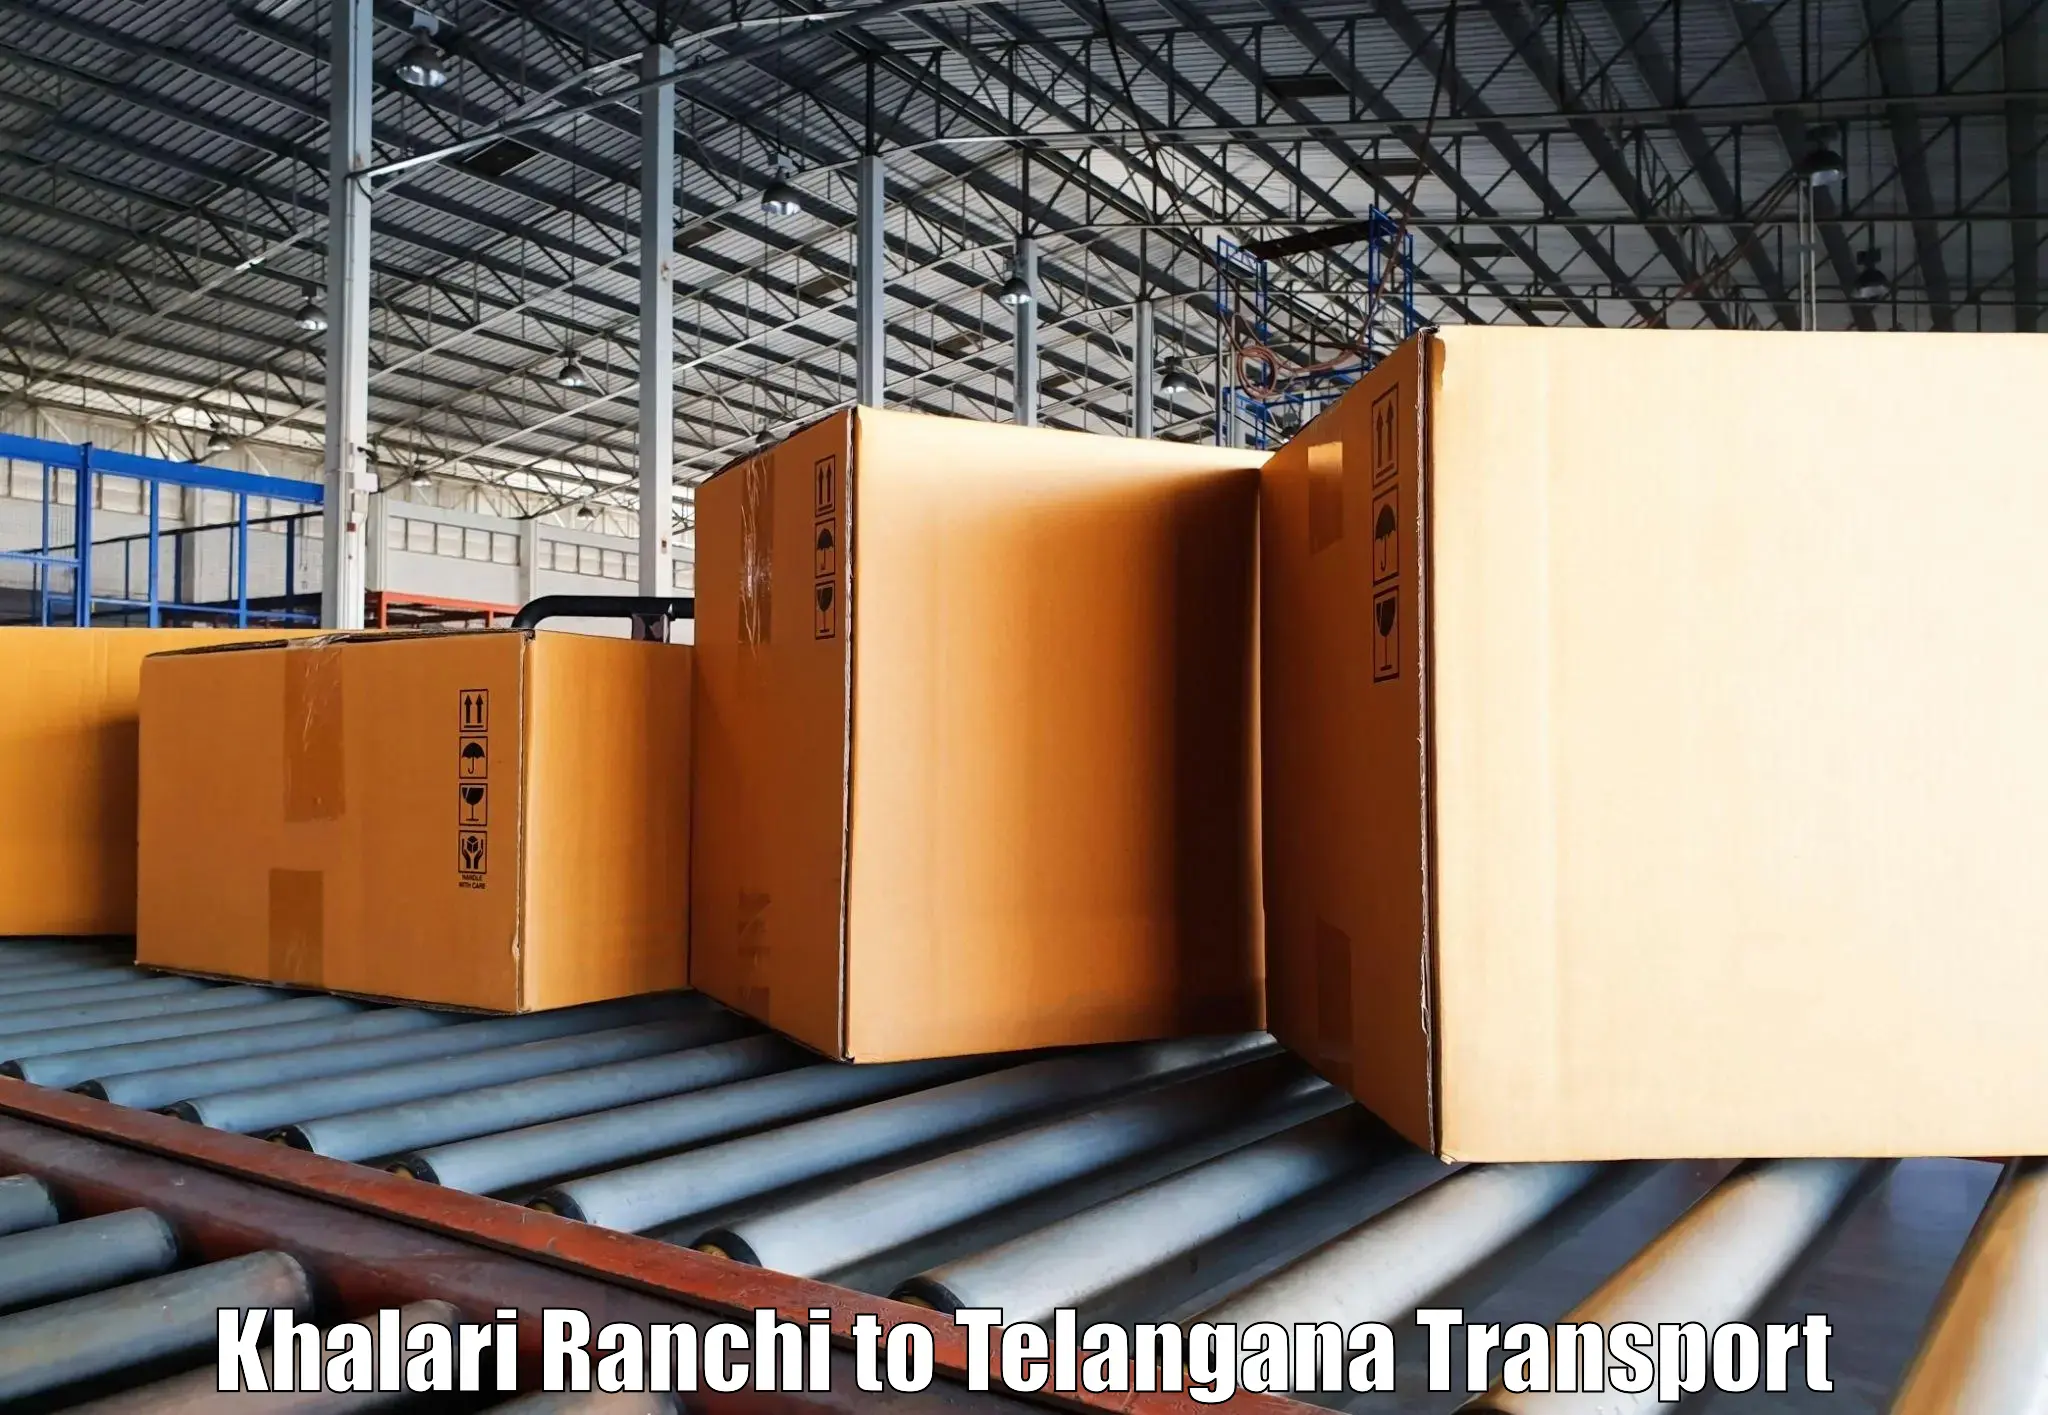 Transport shared services in Khalari Ranchi to Mulugu